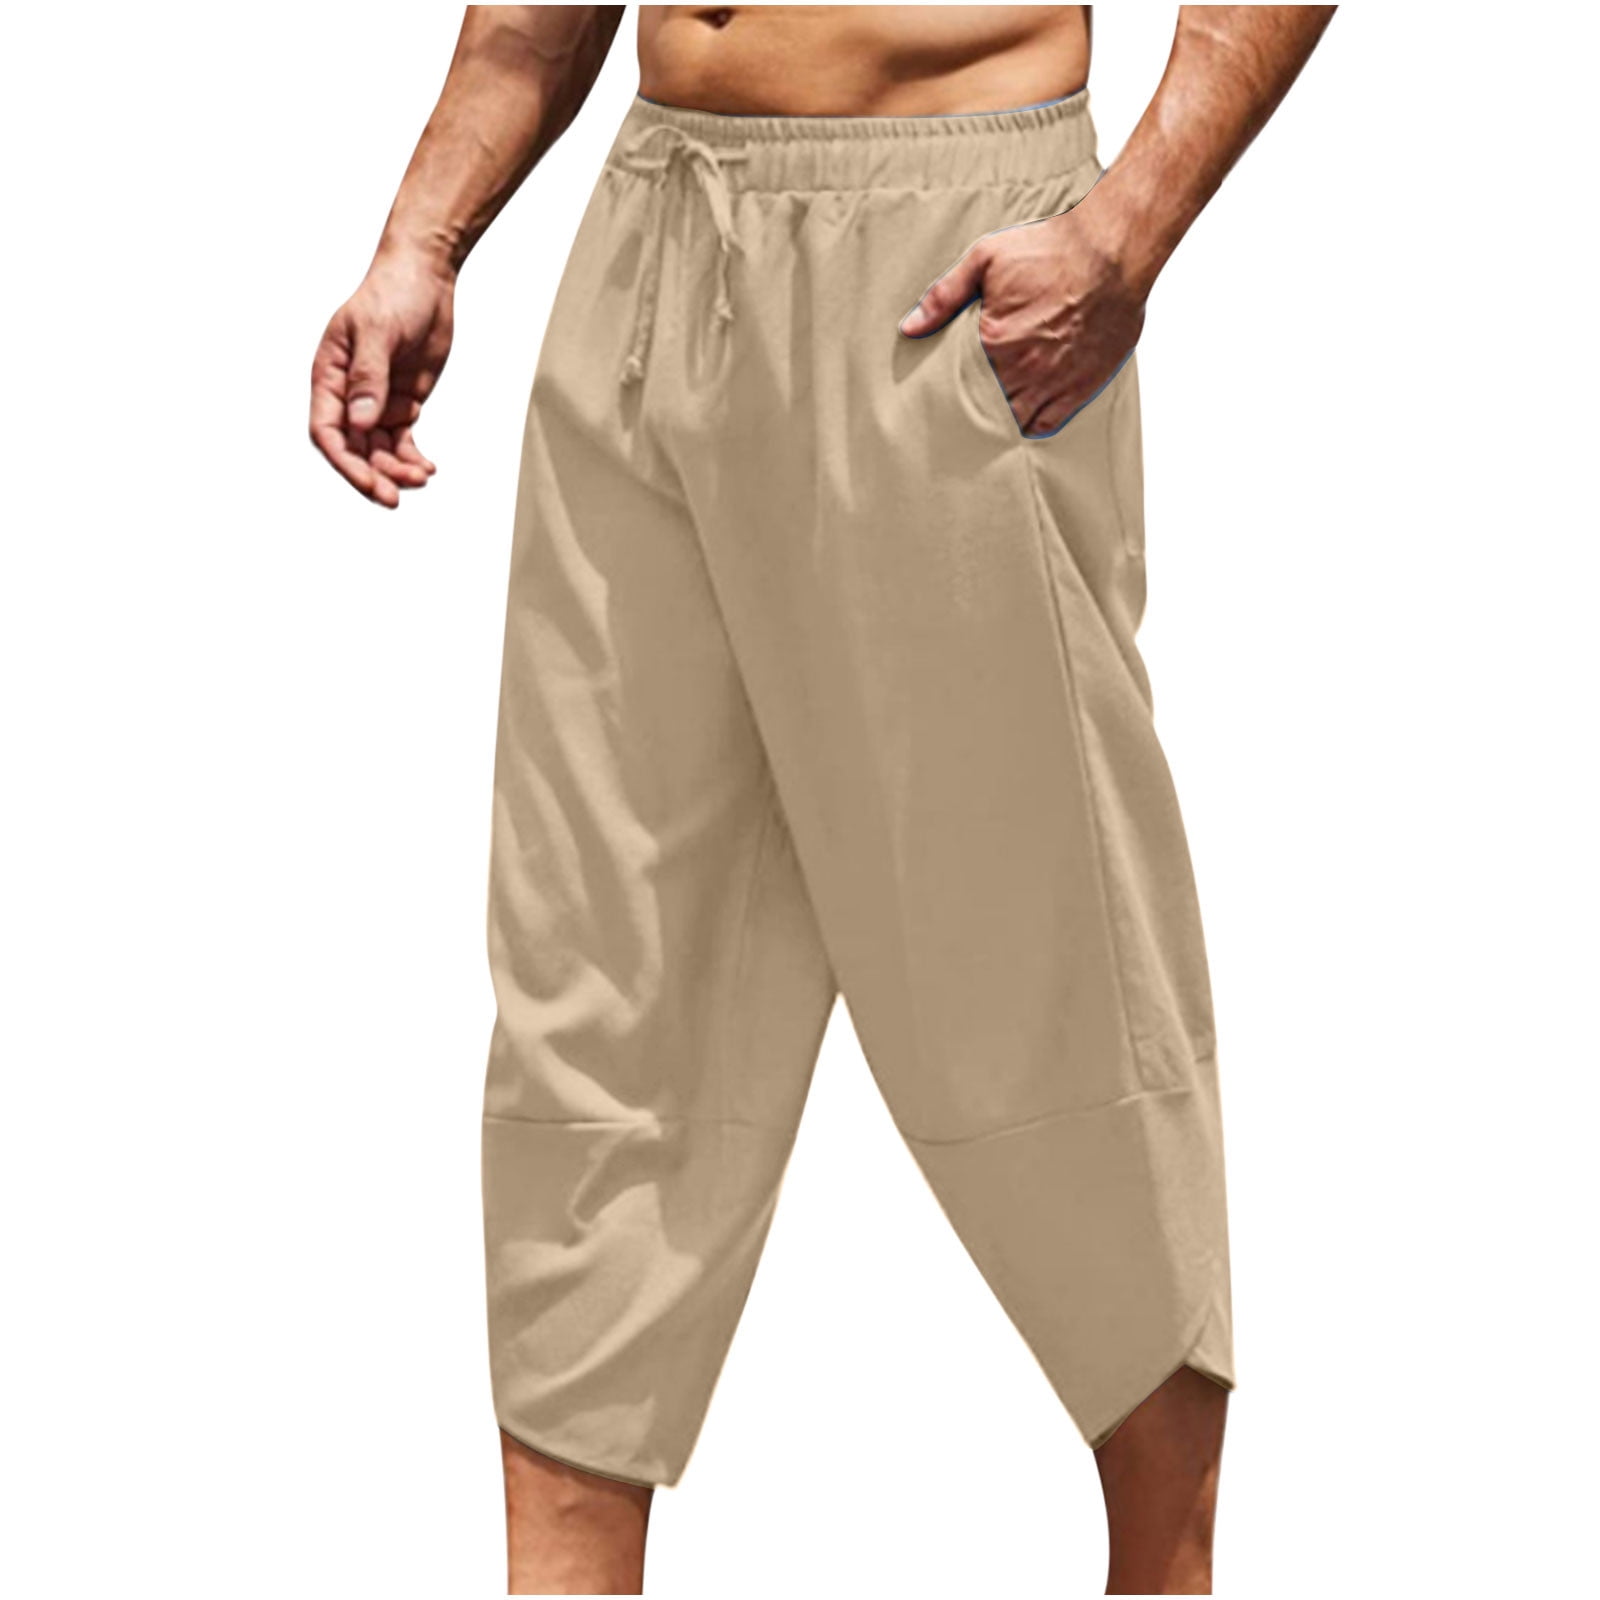 amelAEA Men's Cotton Linen Pants Elastic Waist Capri Pants Drawstring ...